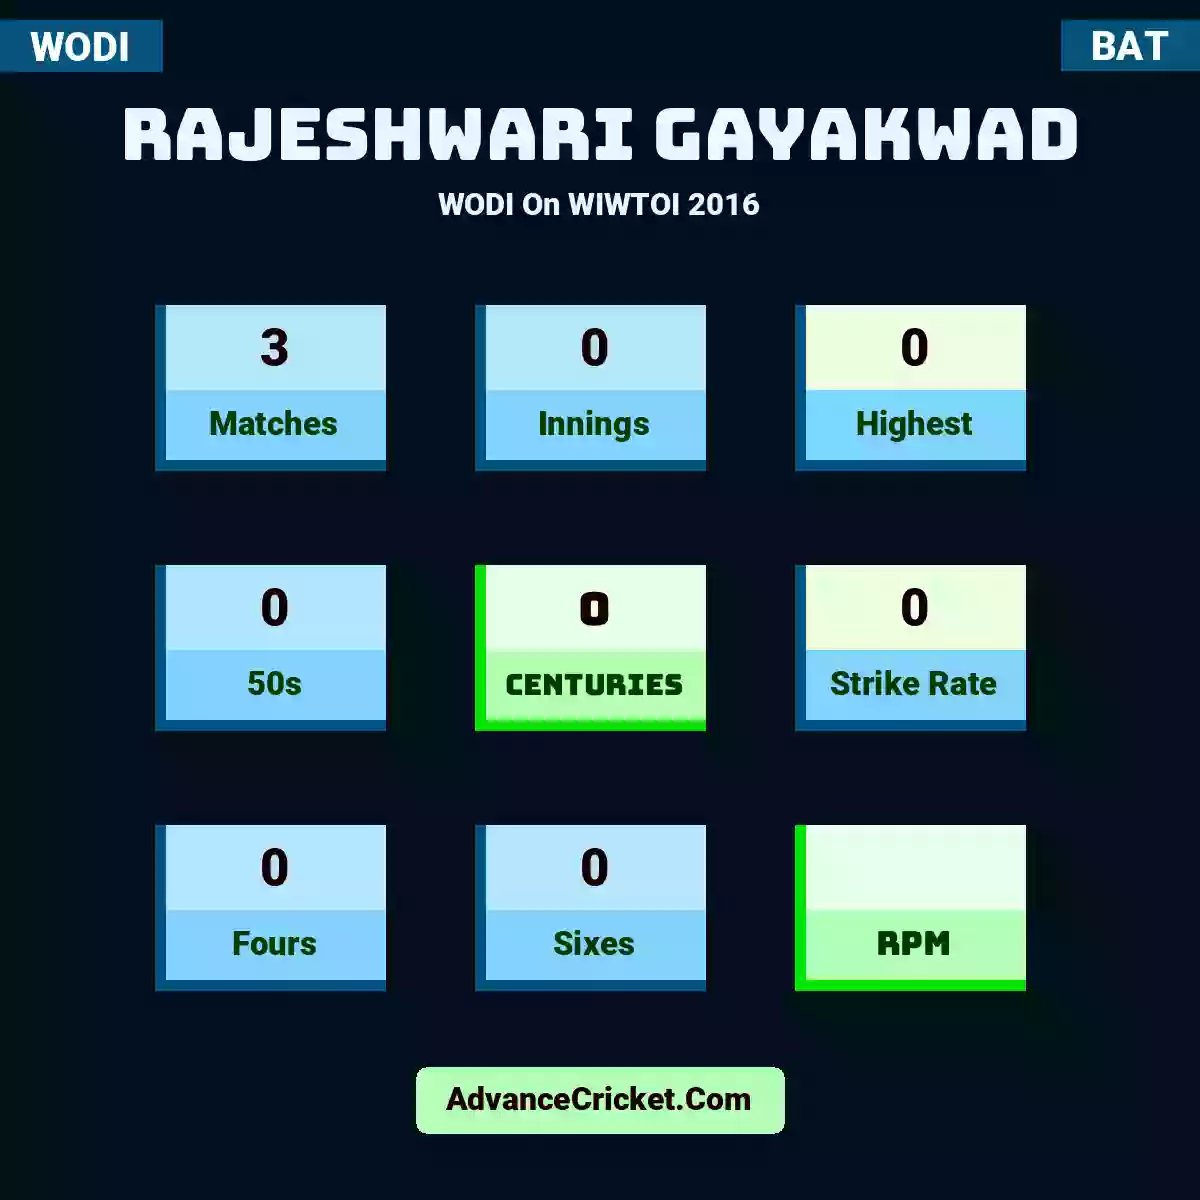 Rajeshwari Gayakwad WODI  On WIWTOI 2016, Rajeshwari Gayakwad played 3 matches, scored 0 runs as highest, 0 half-centuries, and 0 centuries, with a strike rate of 0. R.Gayakwad hit 0 fours and 0 sixes.